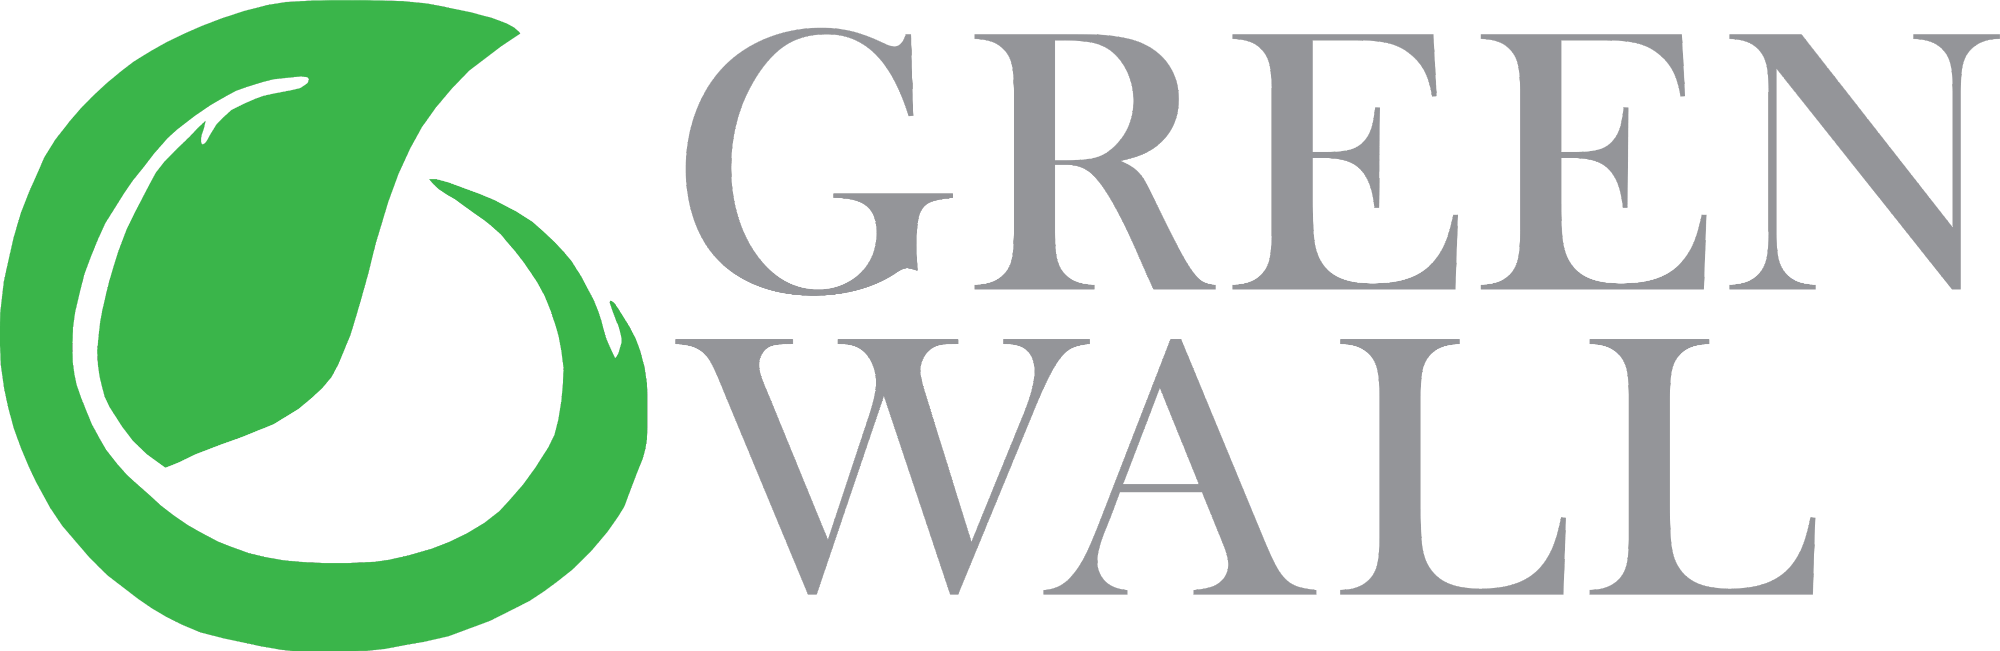 Greenwall_logo